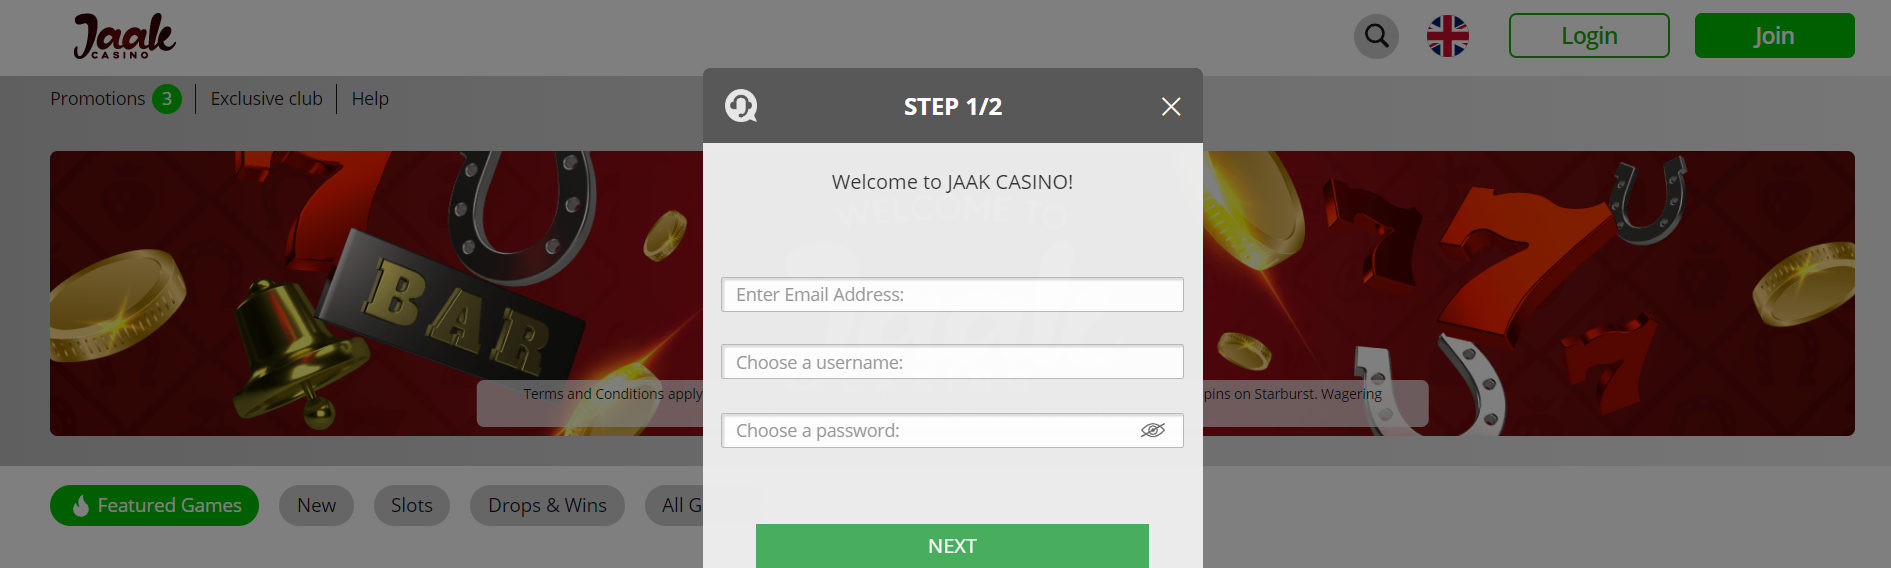 creating an account on jaak casino